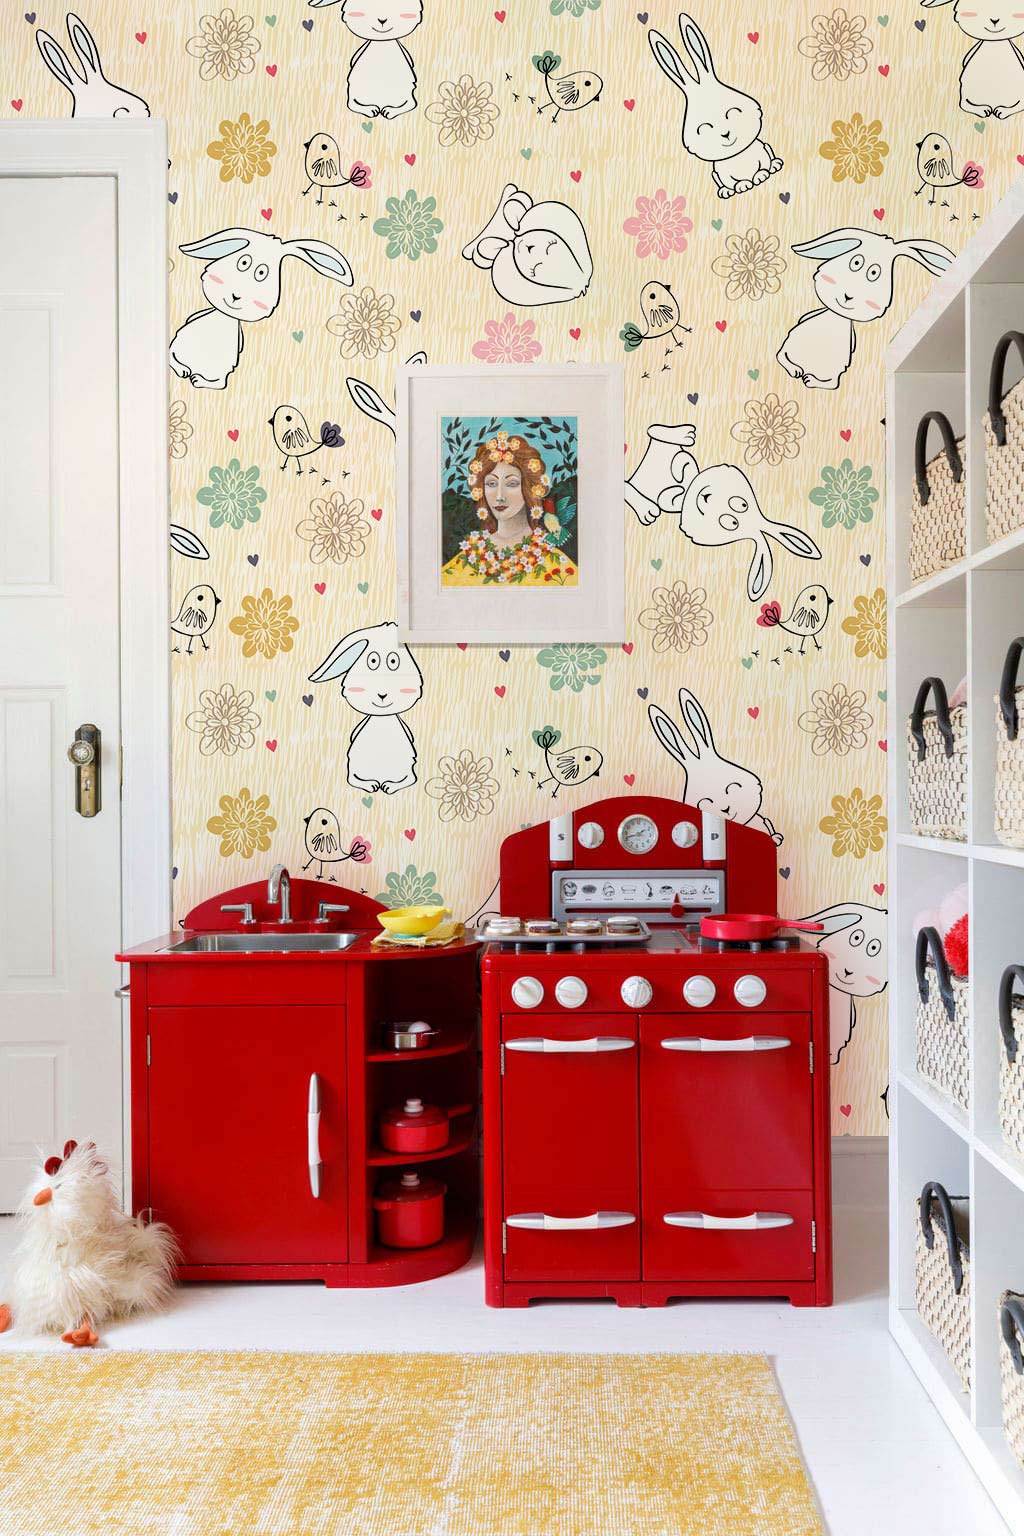 Cute Bunny Mural Wallpaper Home Interior Decor